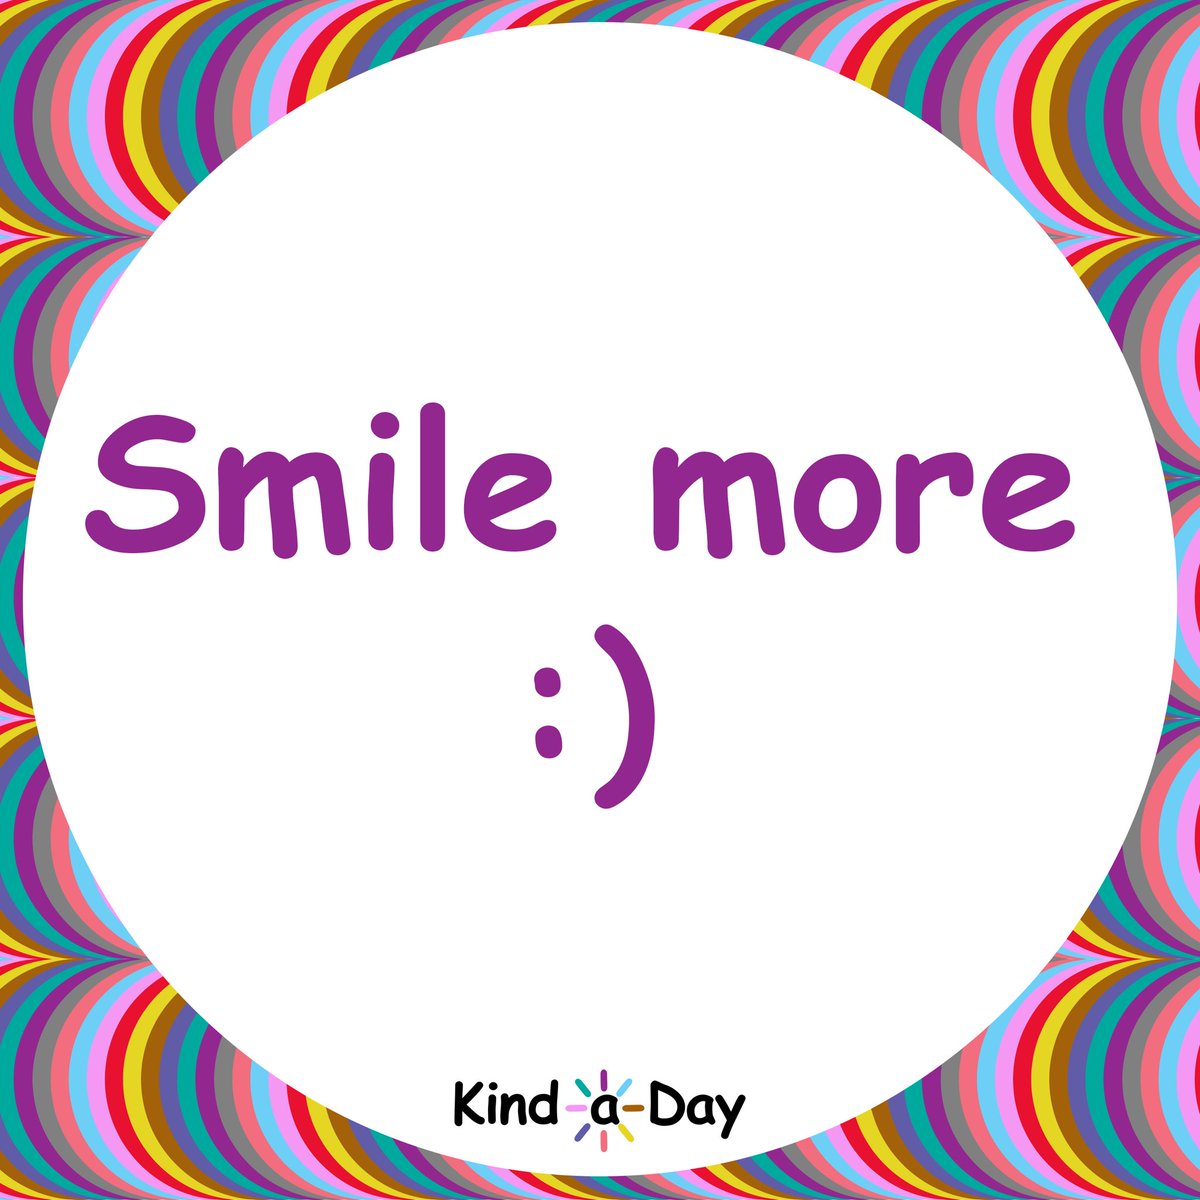 Tuesday Tip: Smile more :)
 
#smile #smilemore #smilealways #smiles #shareasmile #makesomeonesmile #kind #kindness #kindlife #ActsOfKindness #SpreadKindness #BeKind #KindnessMatters #ChooseKindness #kindnesswins #kindaday #kindnessalways #kindnesseveryday #kindness365